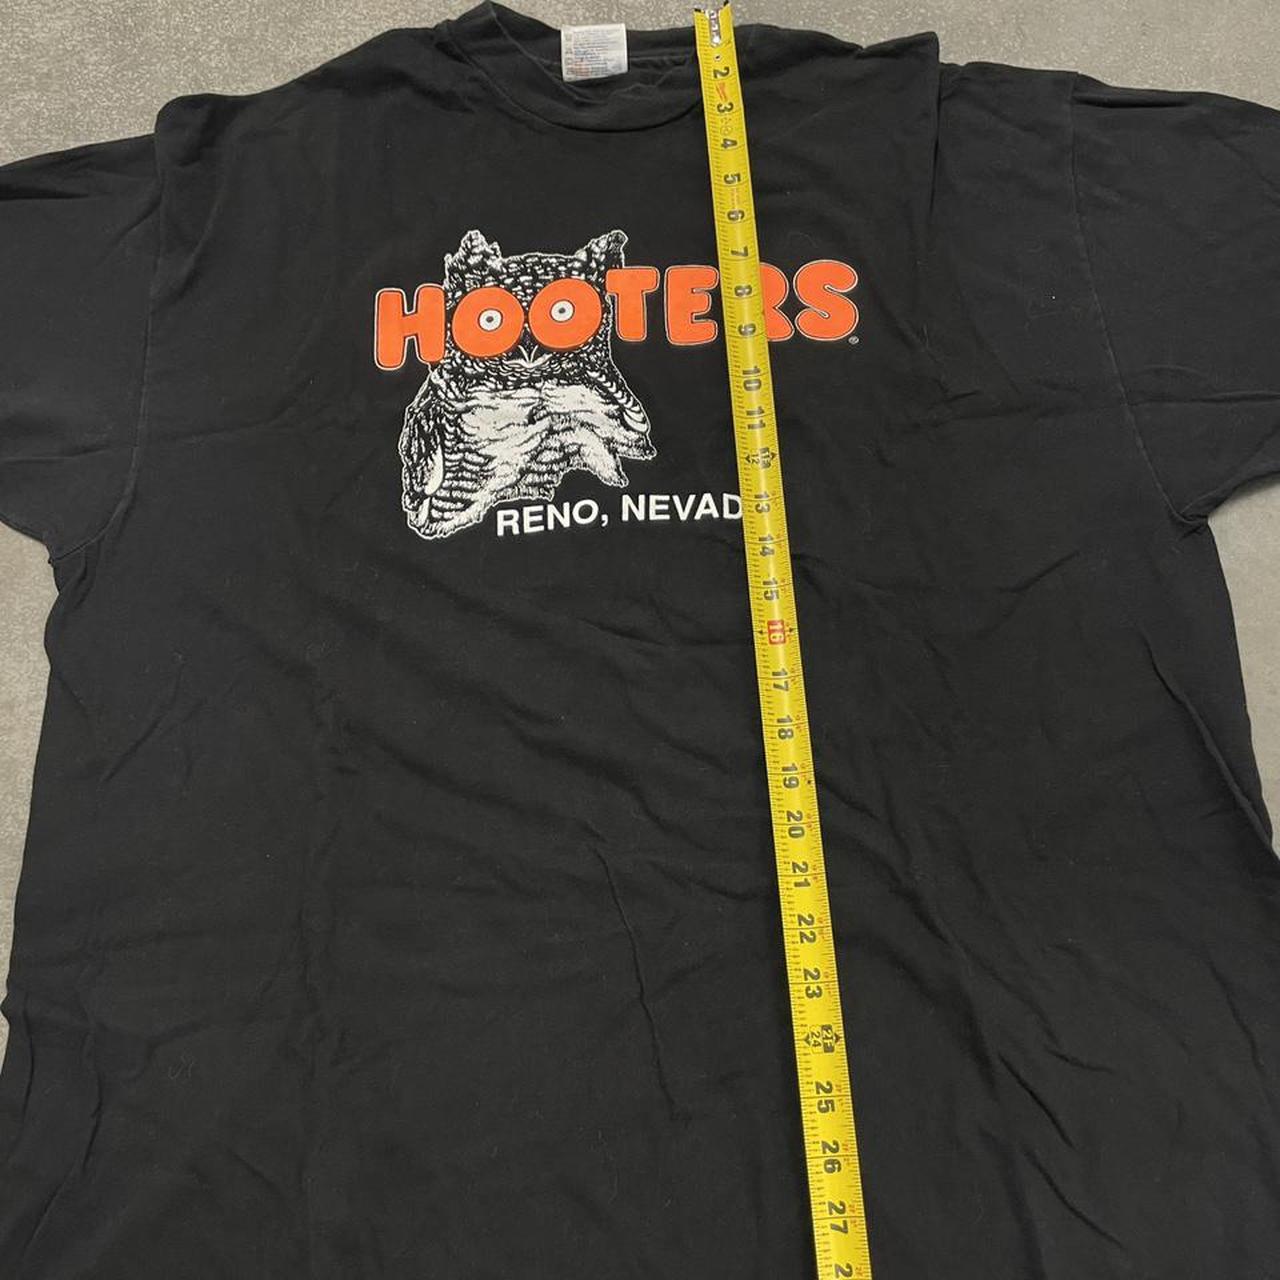 Product Image 4 - Vintage Hooters Reno Nevada Shirt